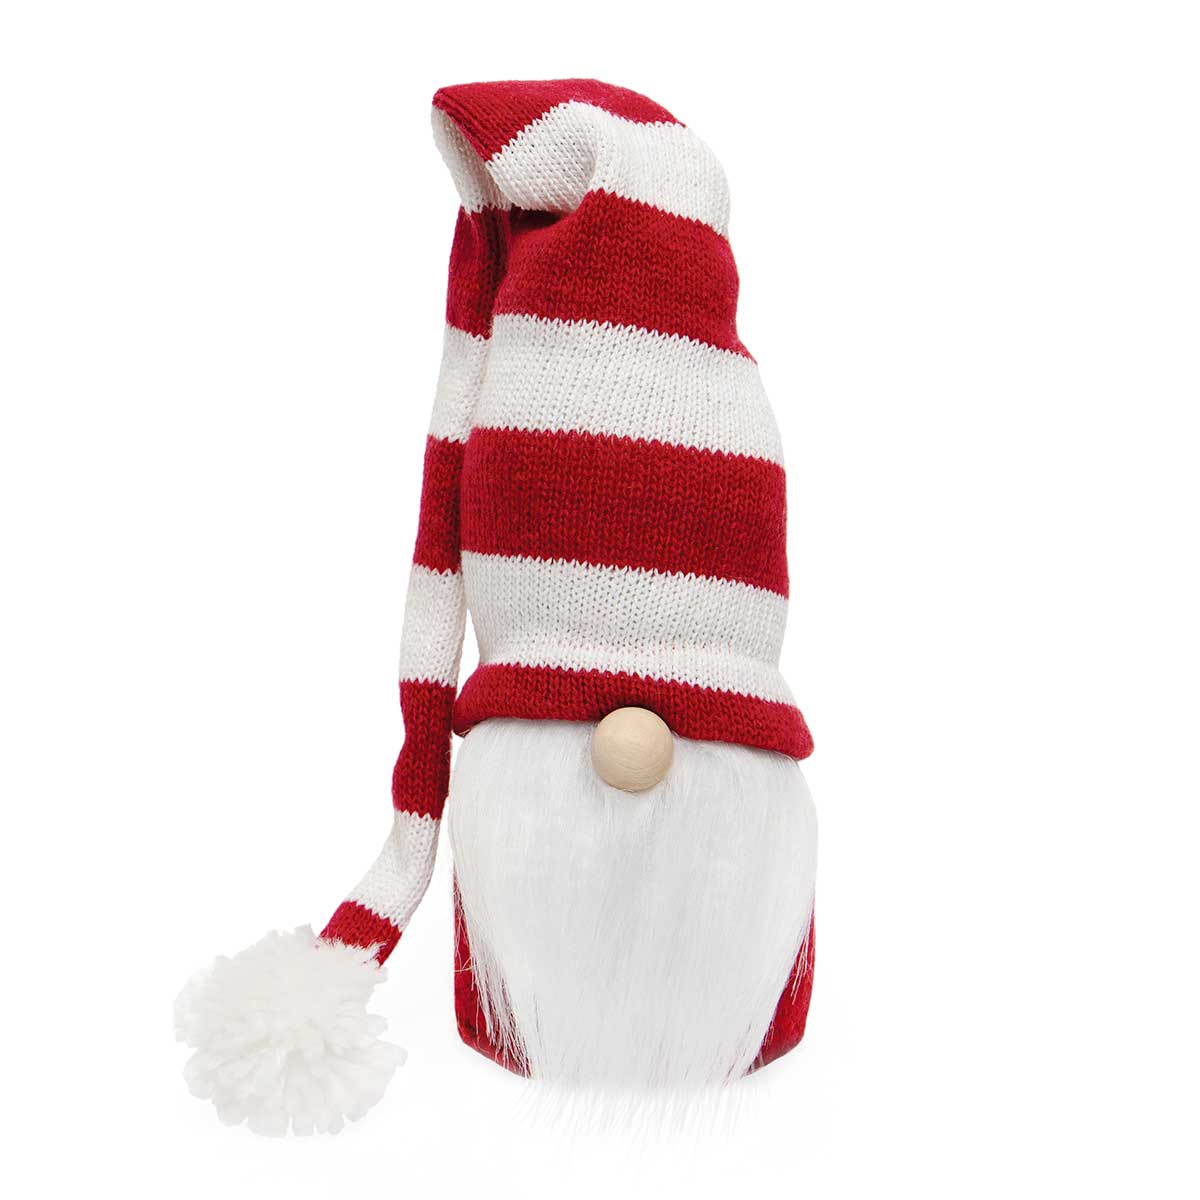 Scandia Gnome Red/White with Yarn Pom-Pom, Stripe Hat Small